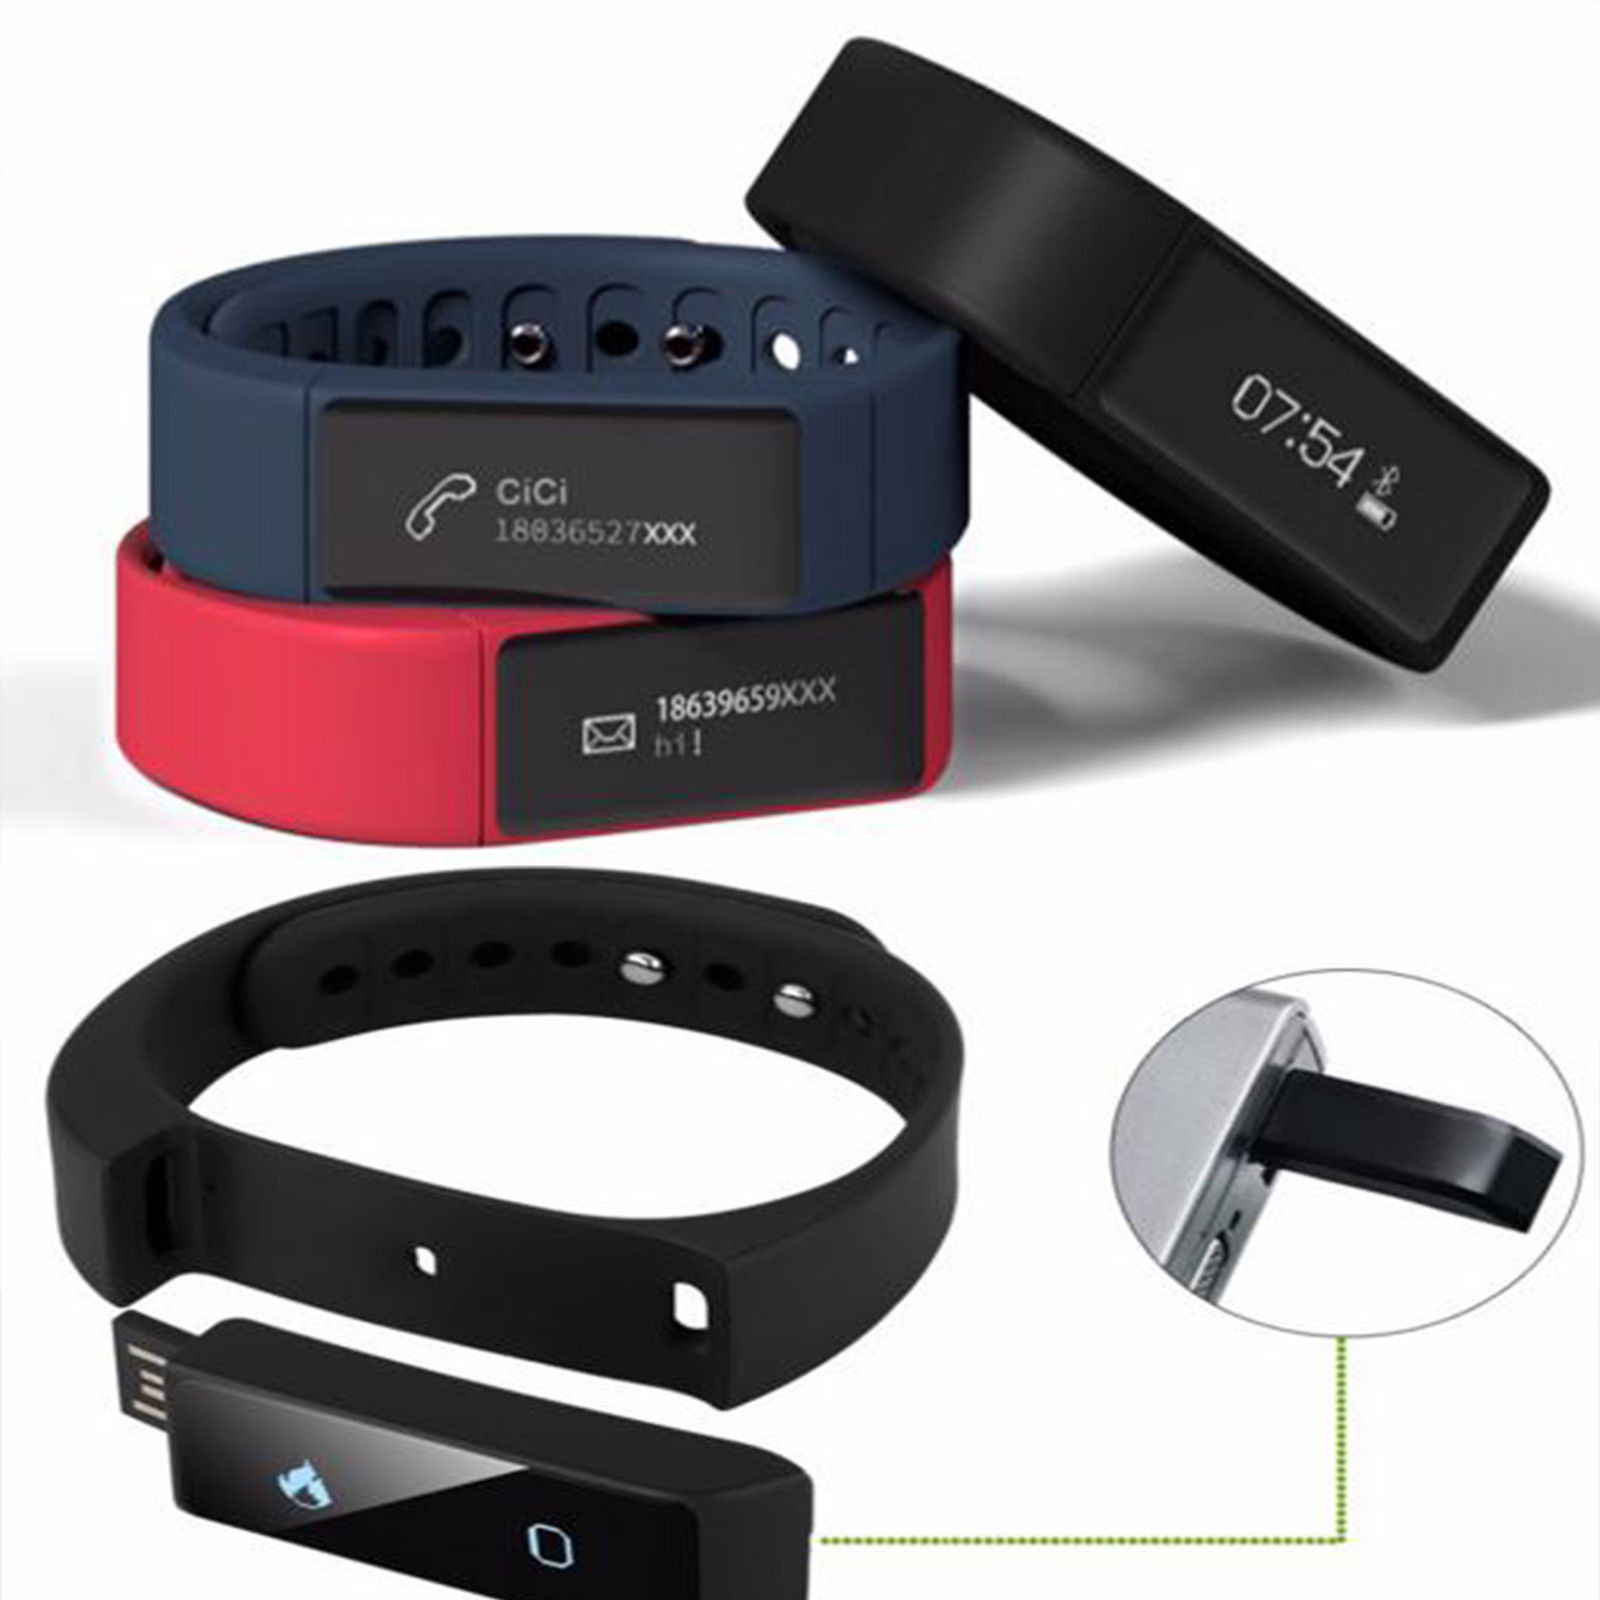 I5 Plus Bluetooth 4.0 Waterproof Smart Fitness Tracker Smart Bracelet for Smart Phone